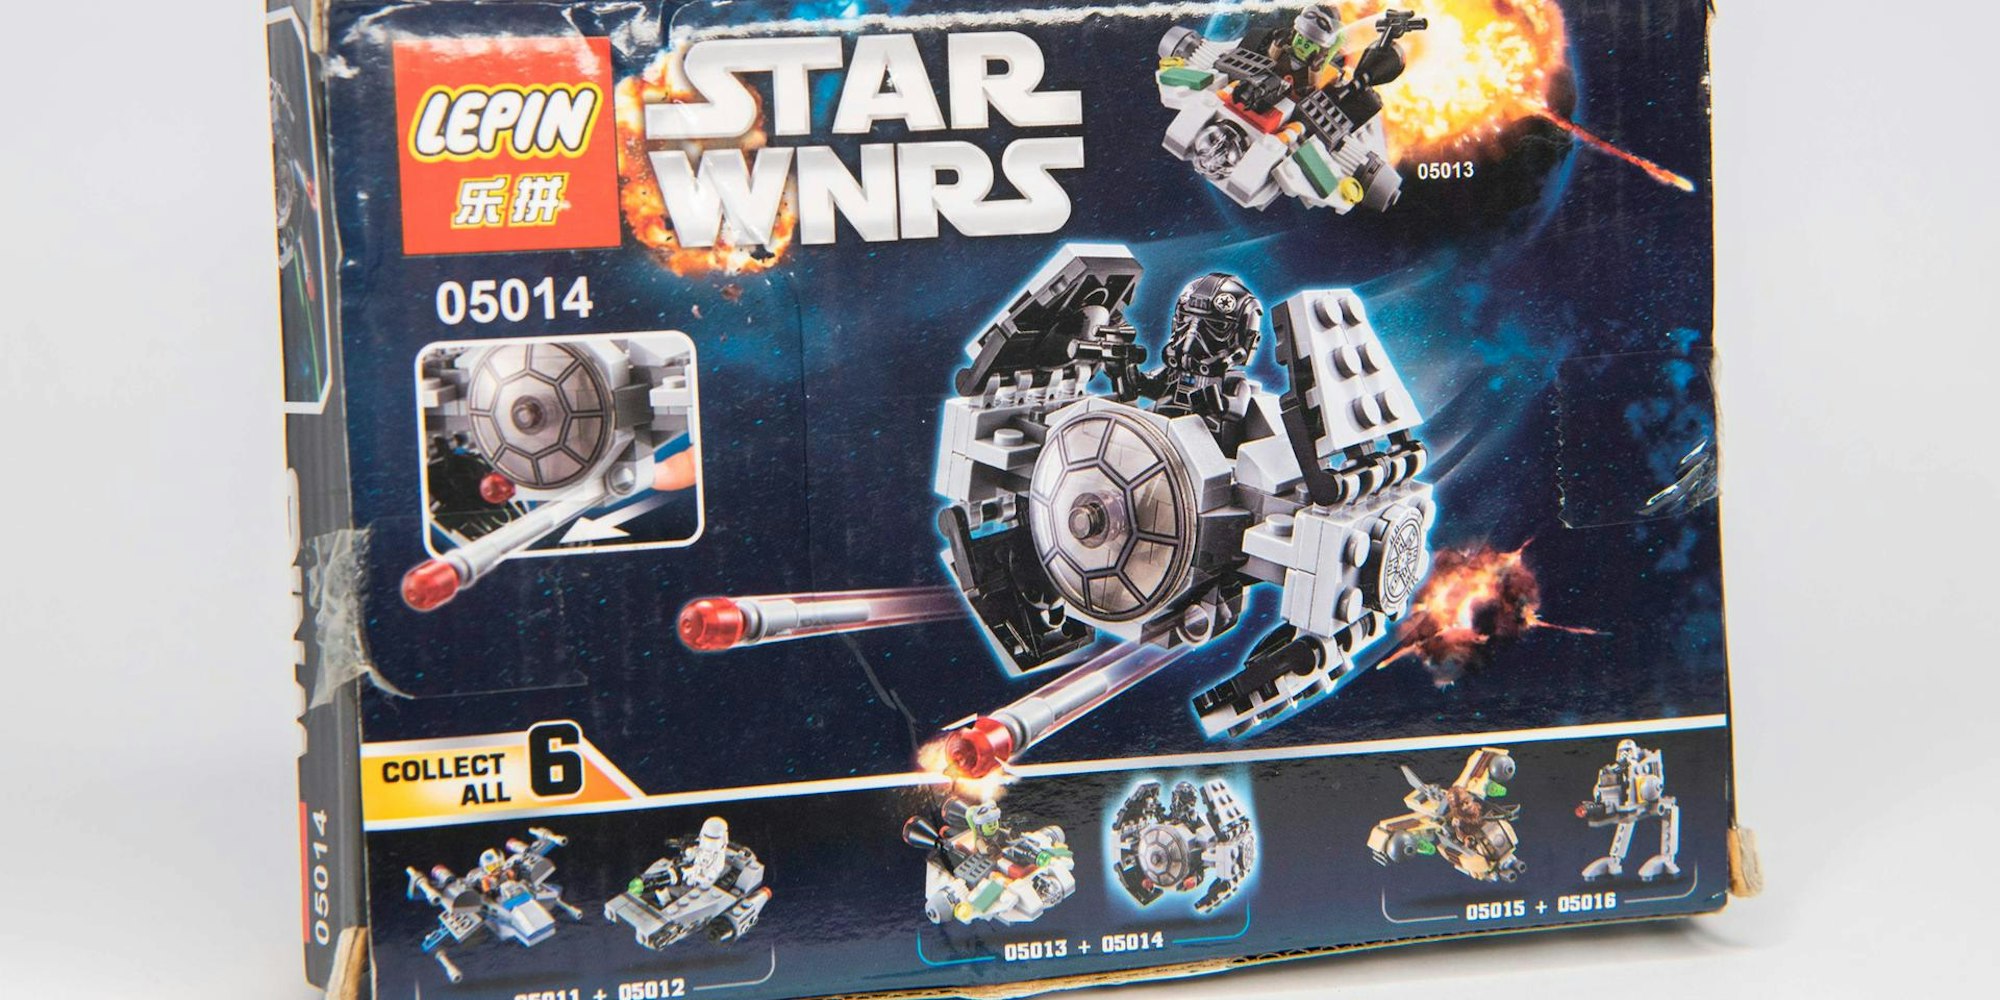 Star Wars Lego afp